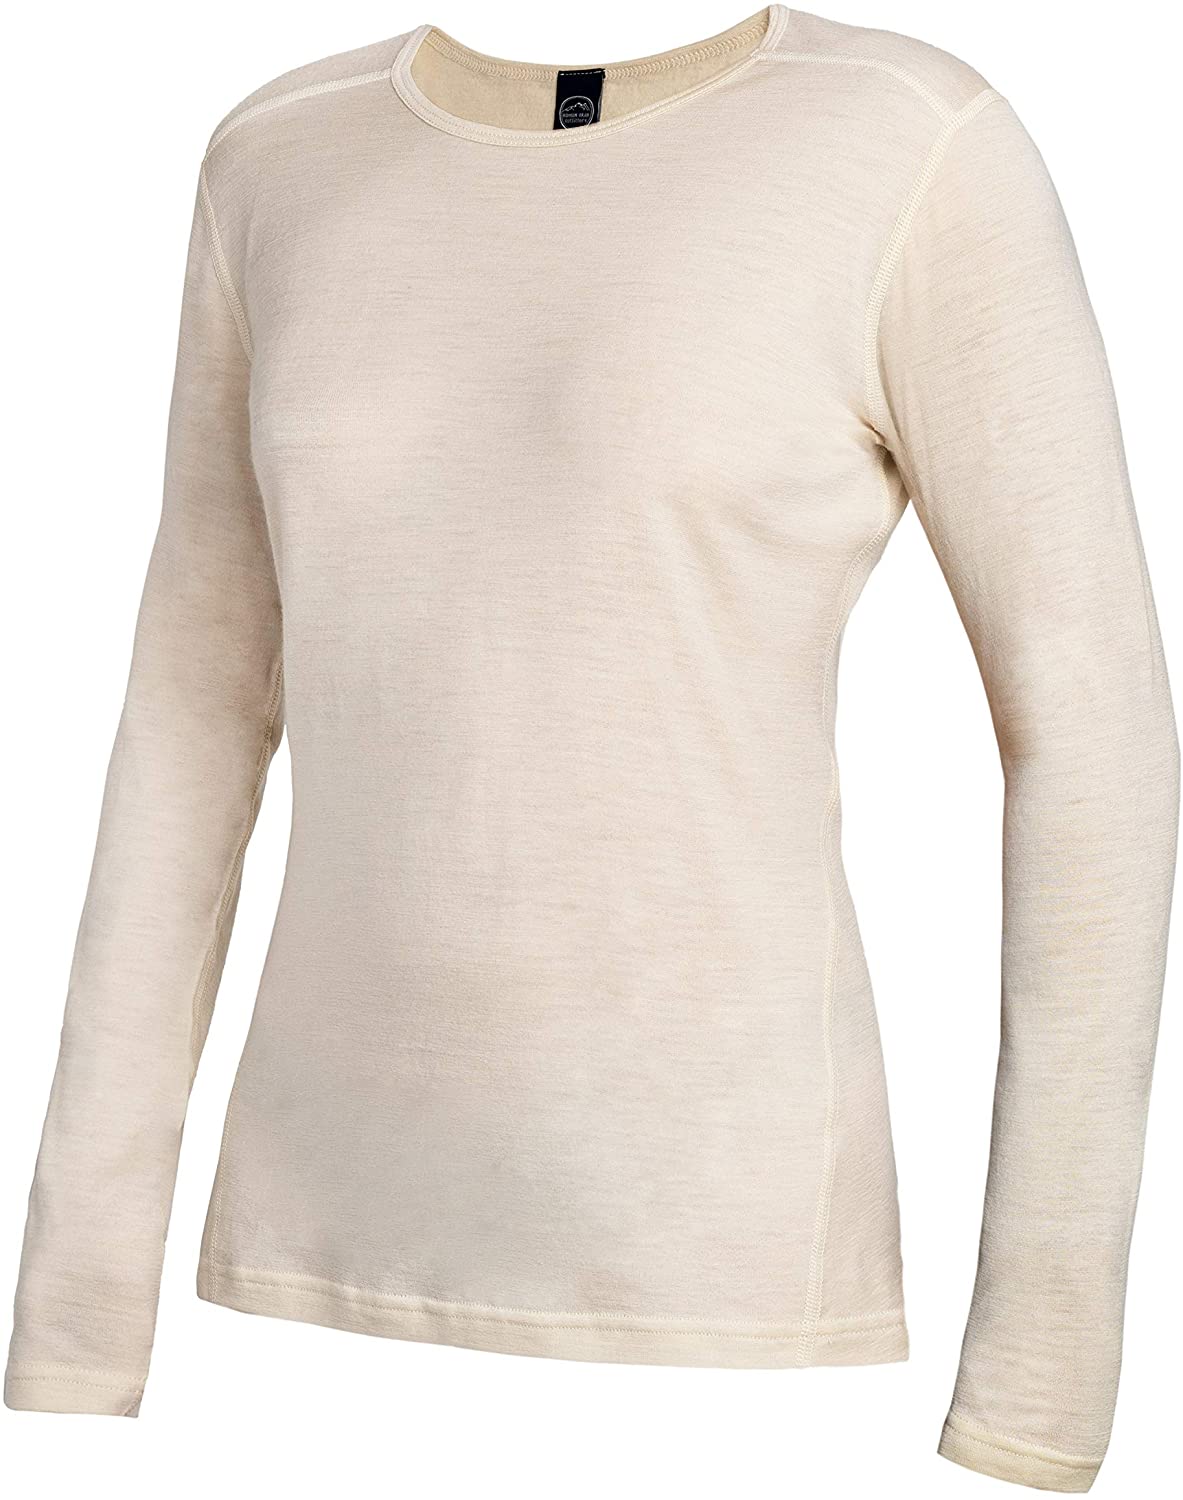 Merino Wool Sleeve Top | Crew Neck Shirt | Cloud Cream - Trail